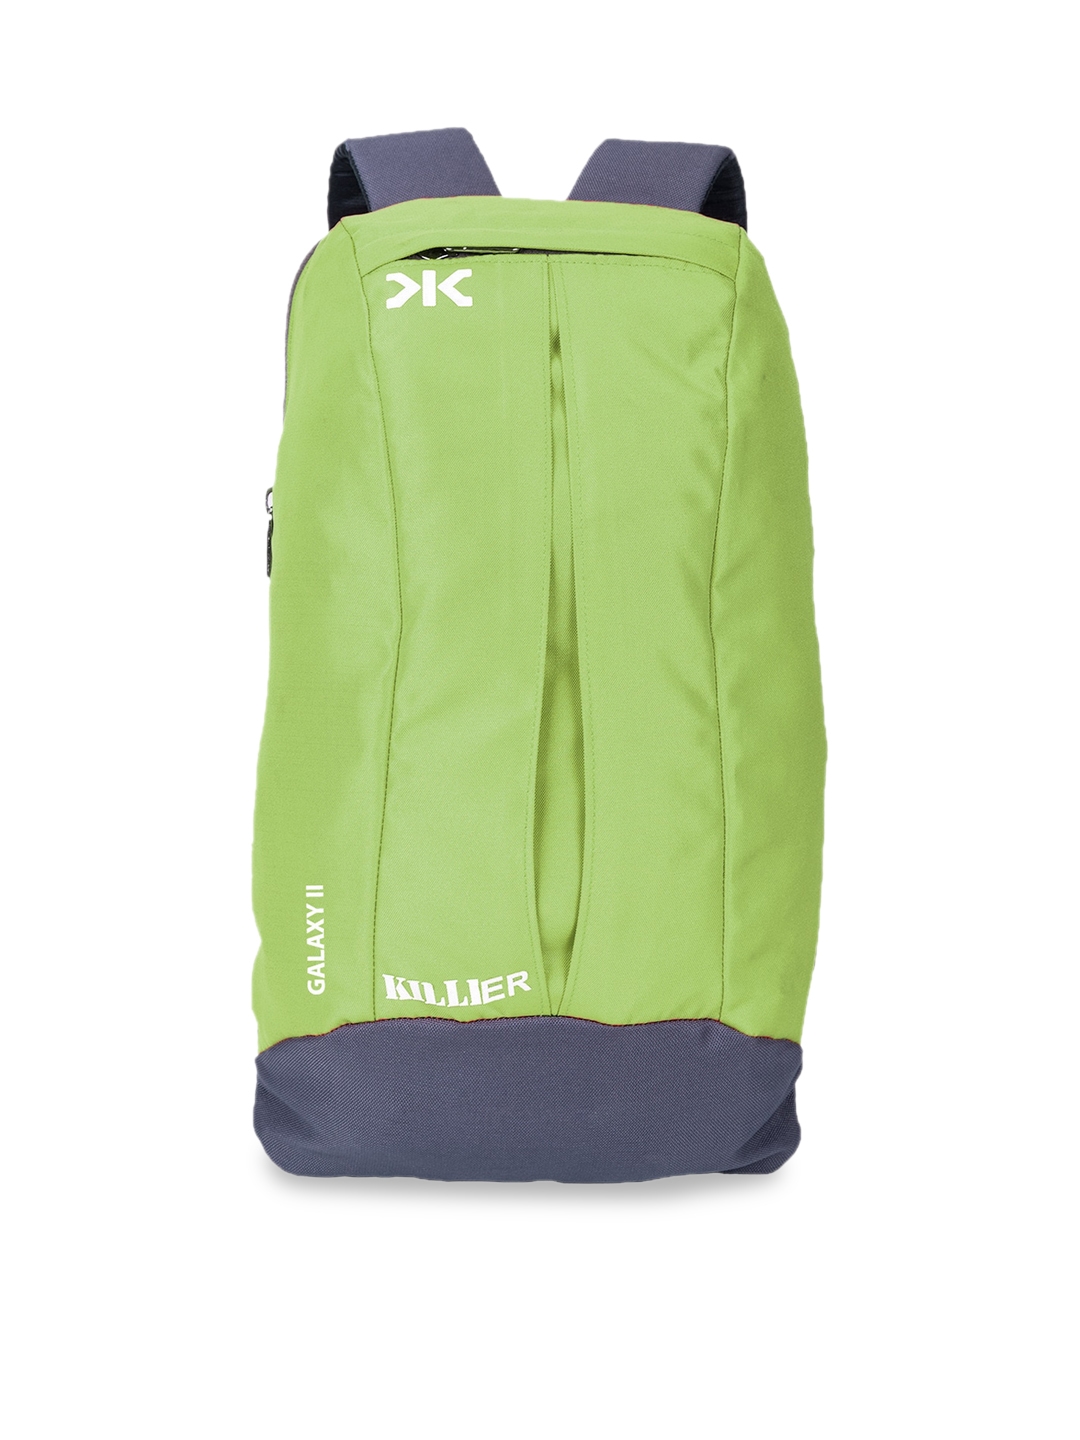 Killer Unisex Green   Grey Colourblocked Backpacks